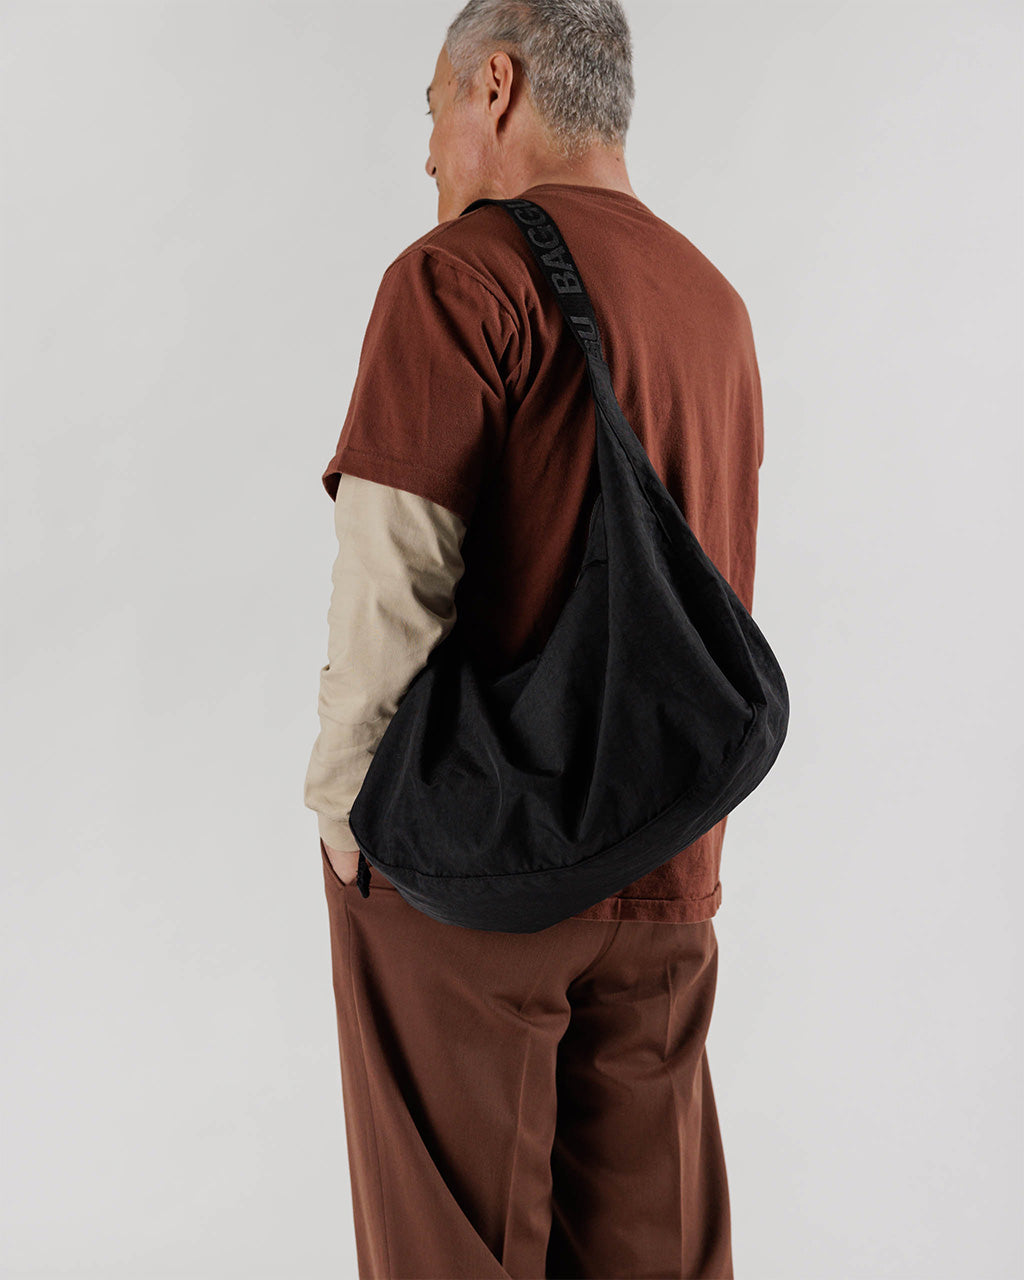 Nylon Shoulder Bag : Black - Baggu